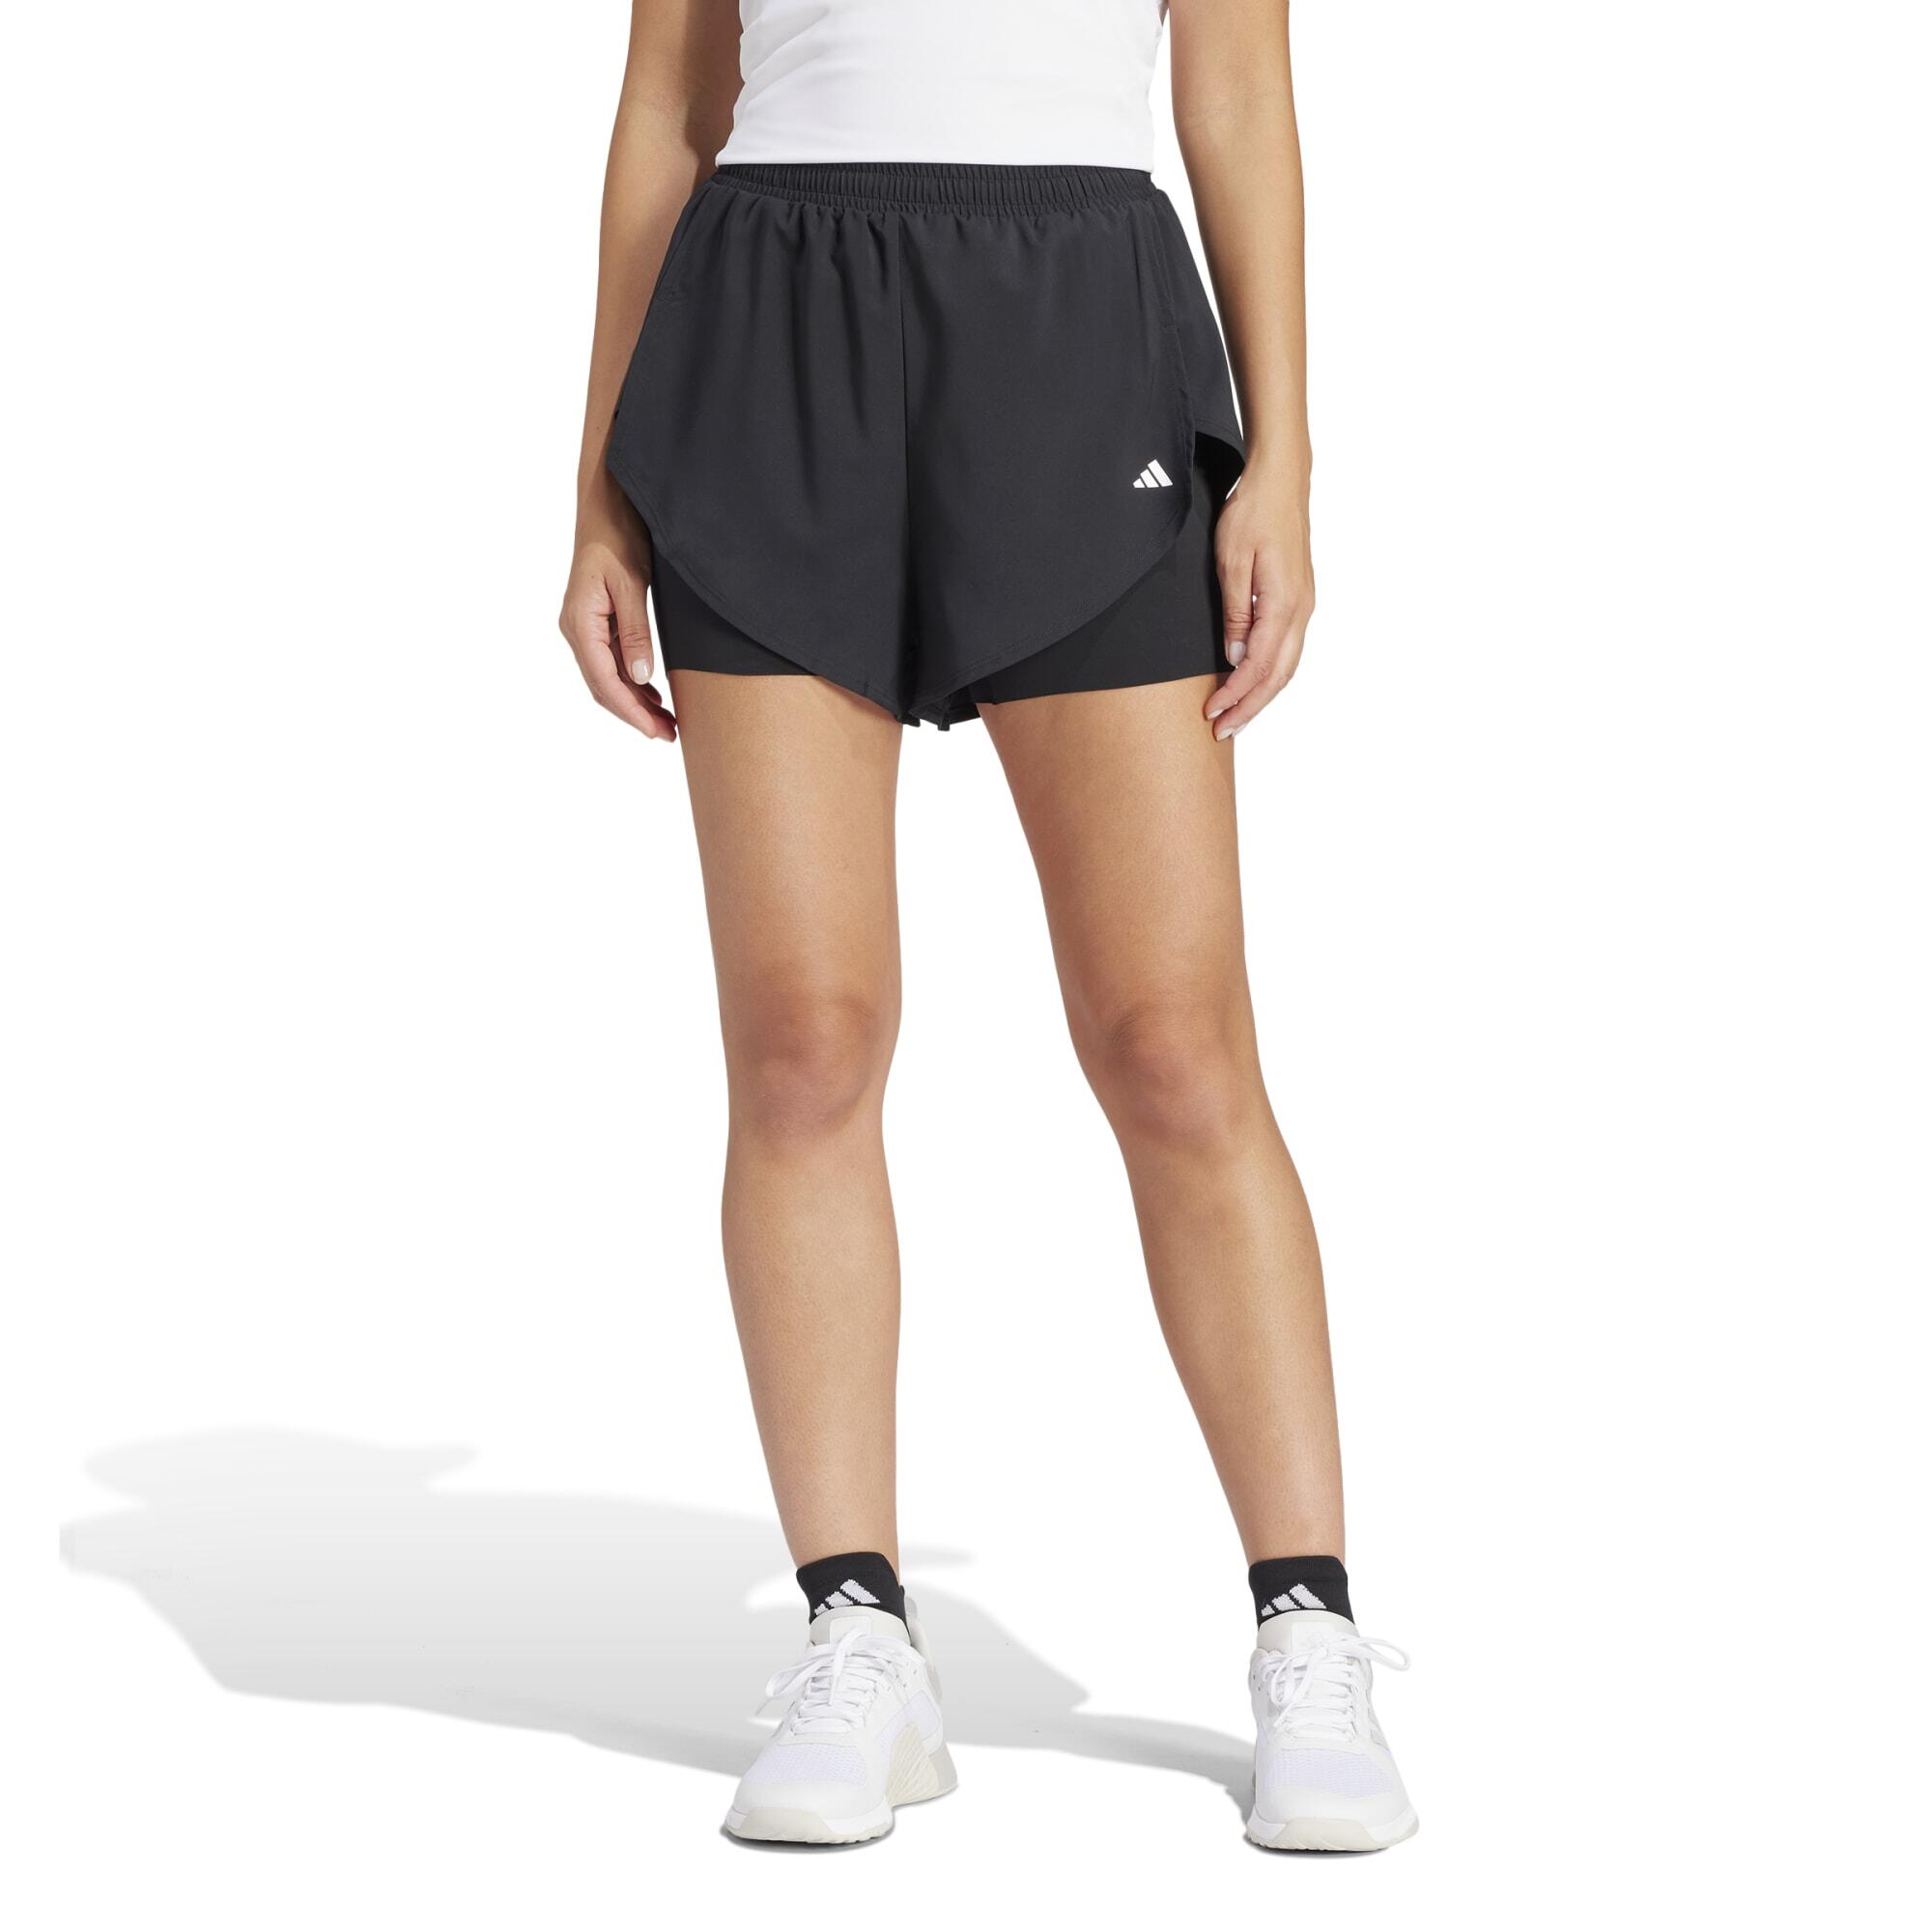 Women's Cardio Fitness Shorts - Black 3/6